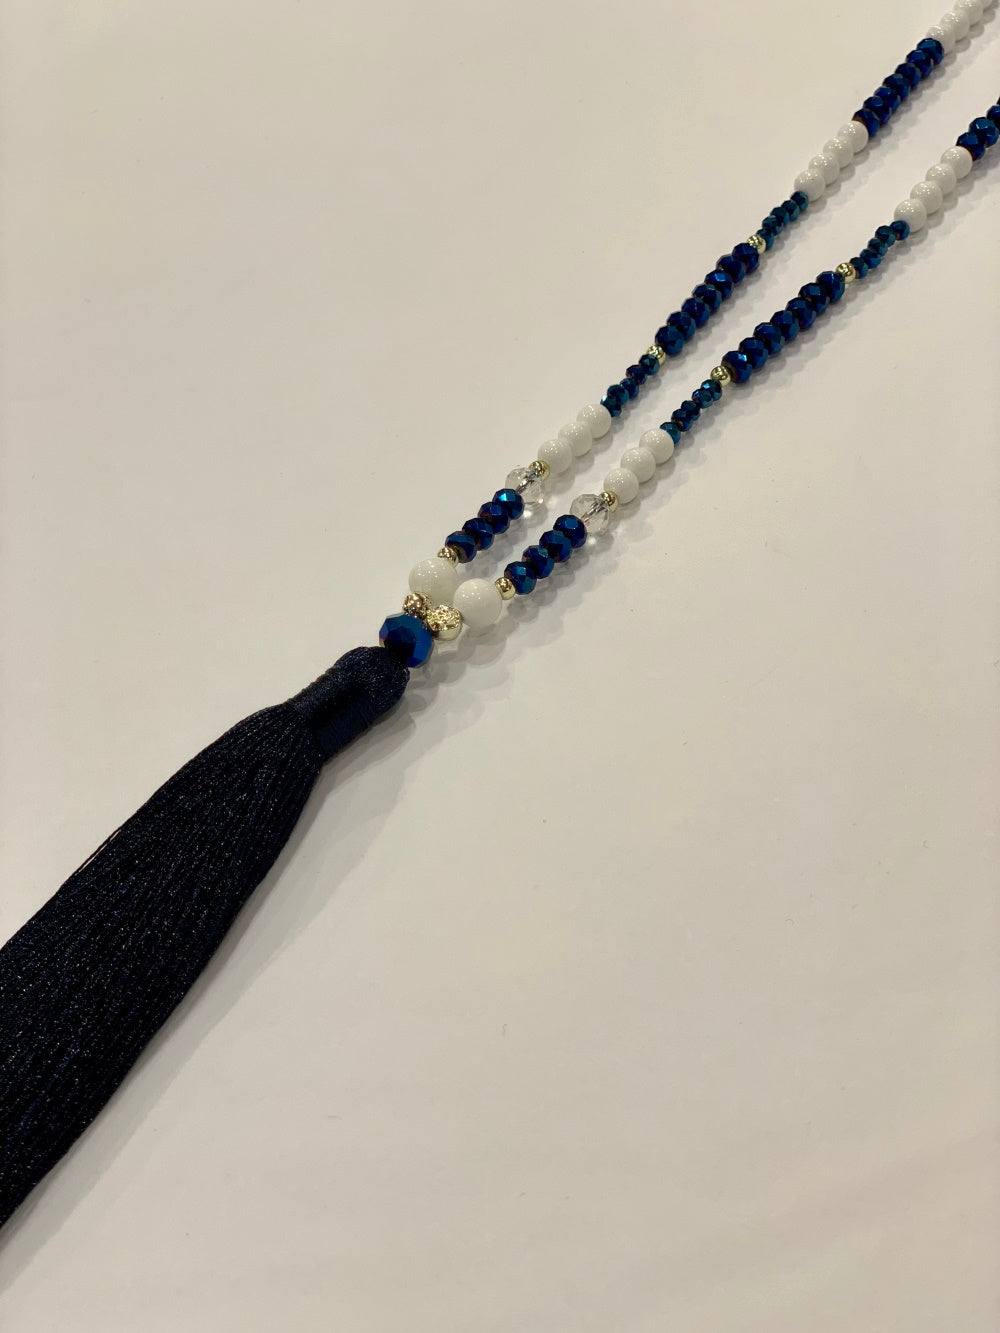 Tassel Necklace - Navy/White